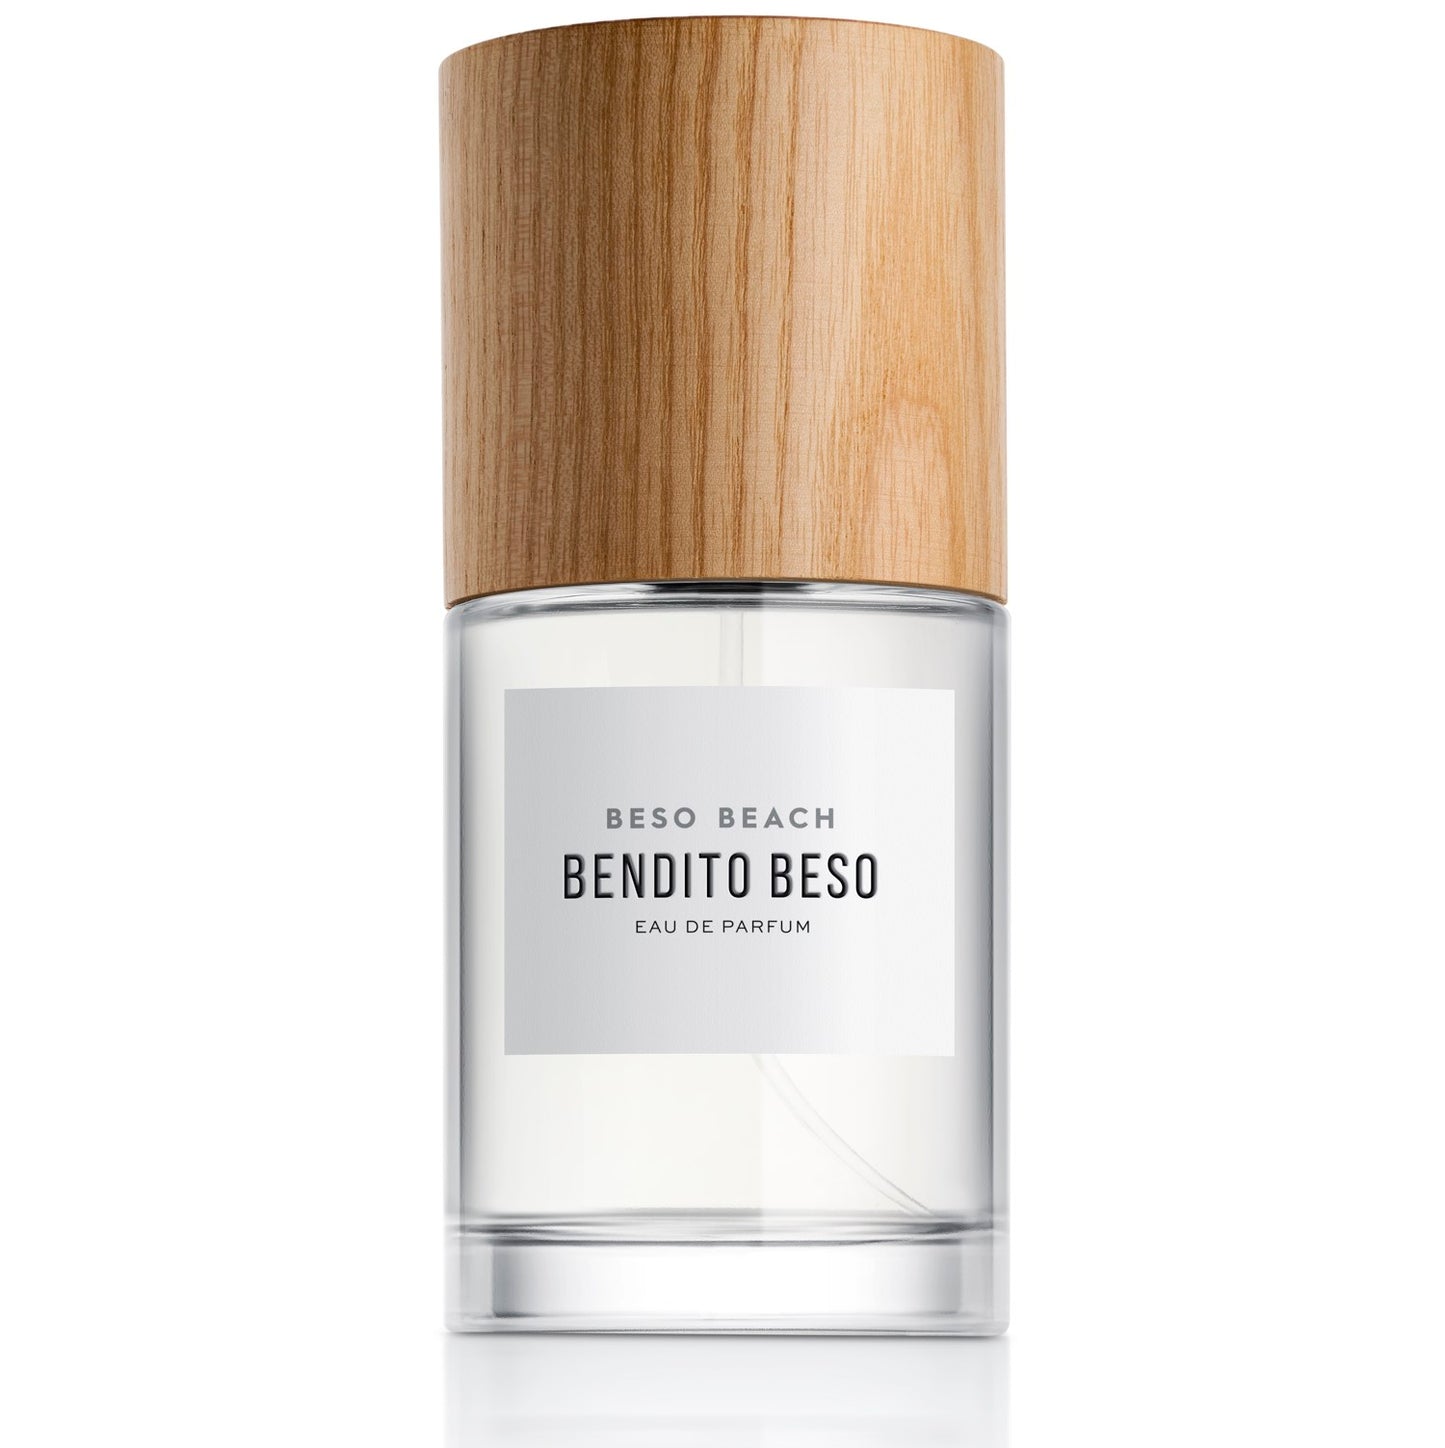 BENDITO Beso, Beso Beach EdP 100 ml